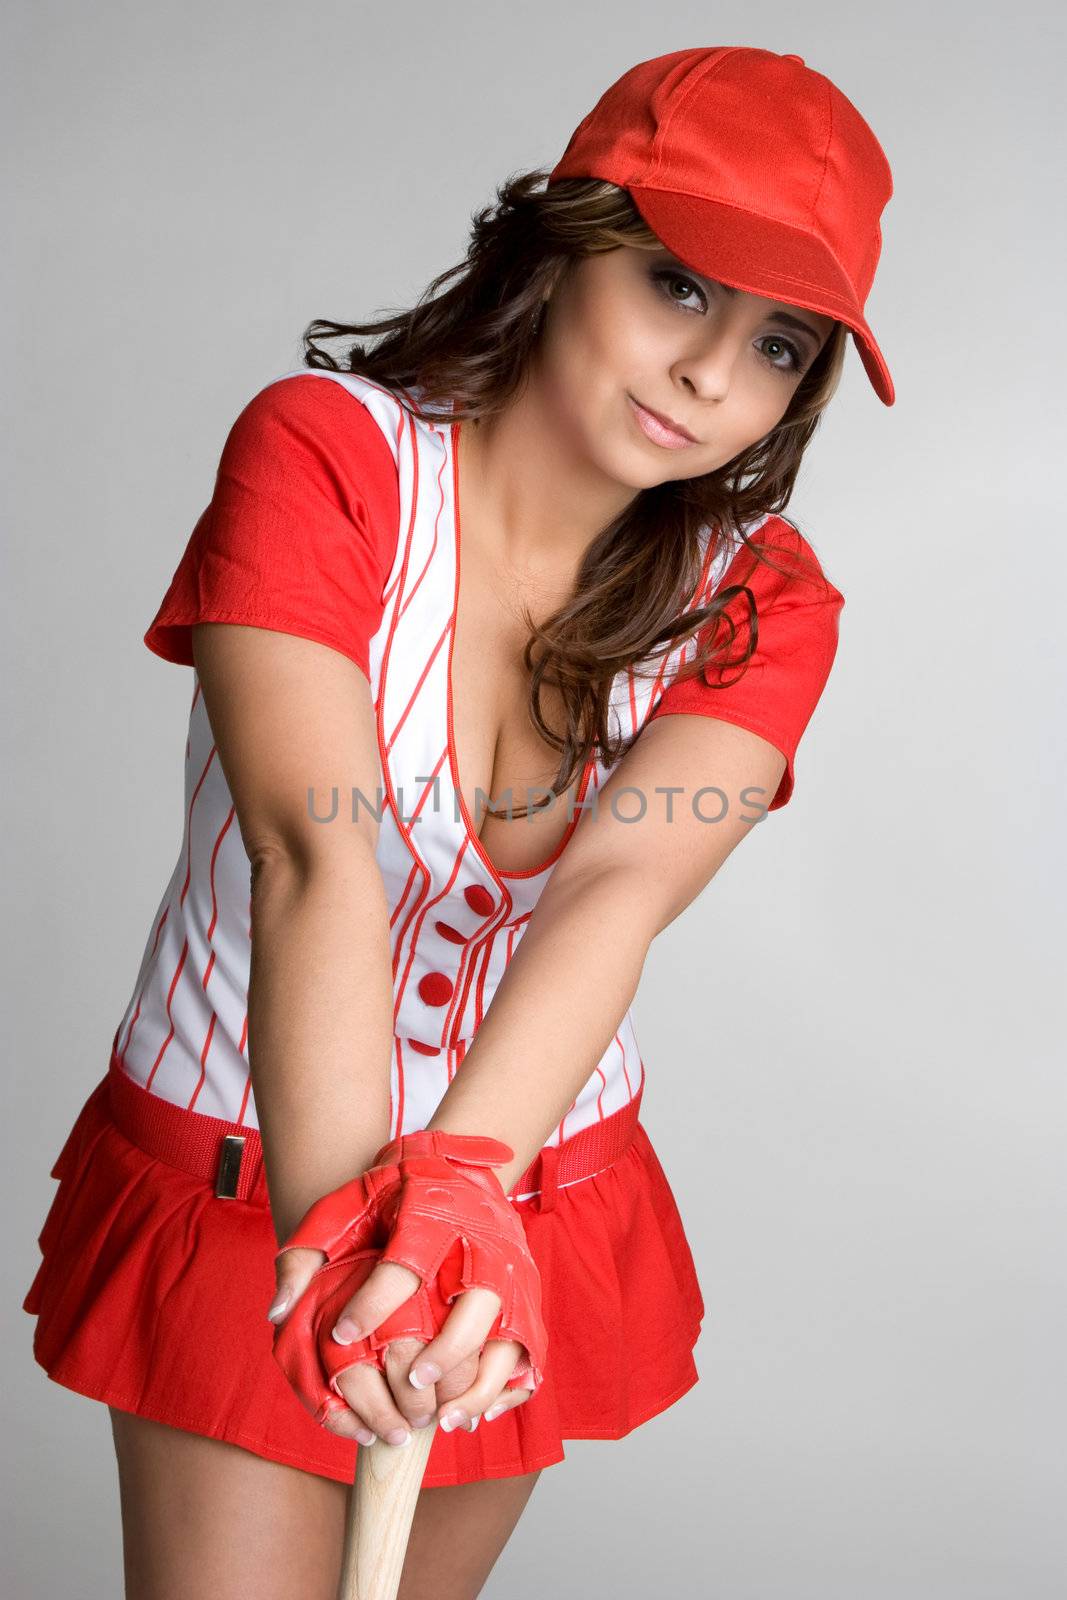 Baseball Girl by keeweeboy